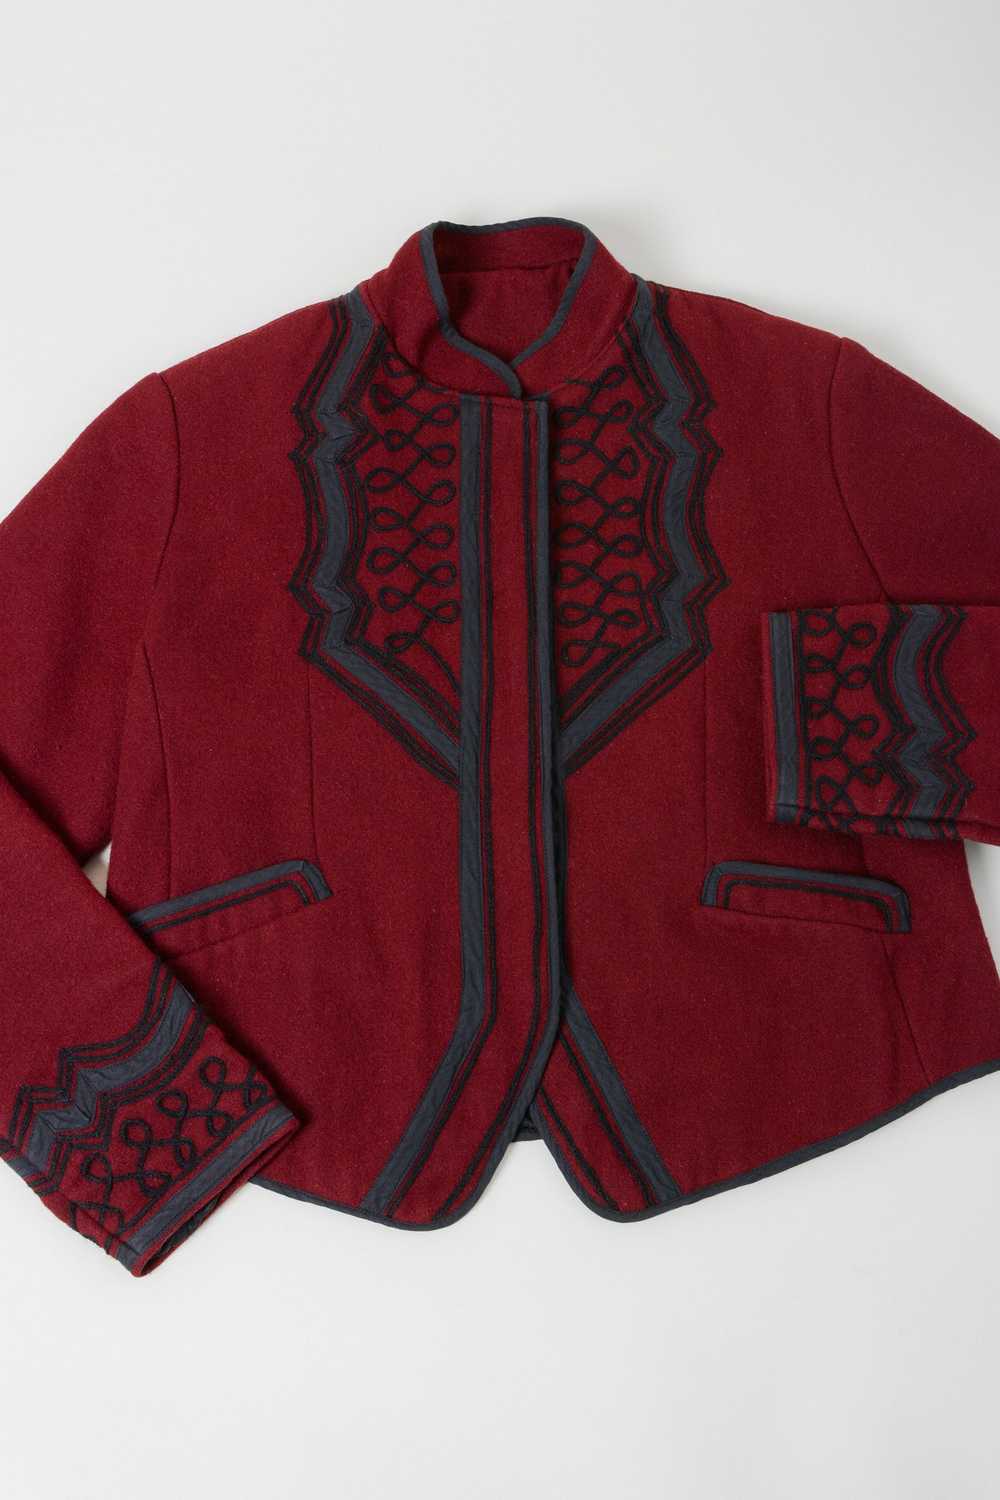 Oxblood Guatemalan Folk Art Wool Jacket - image 4